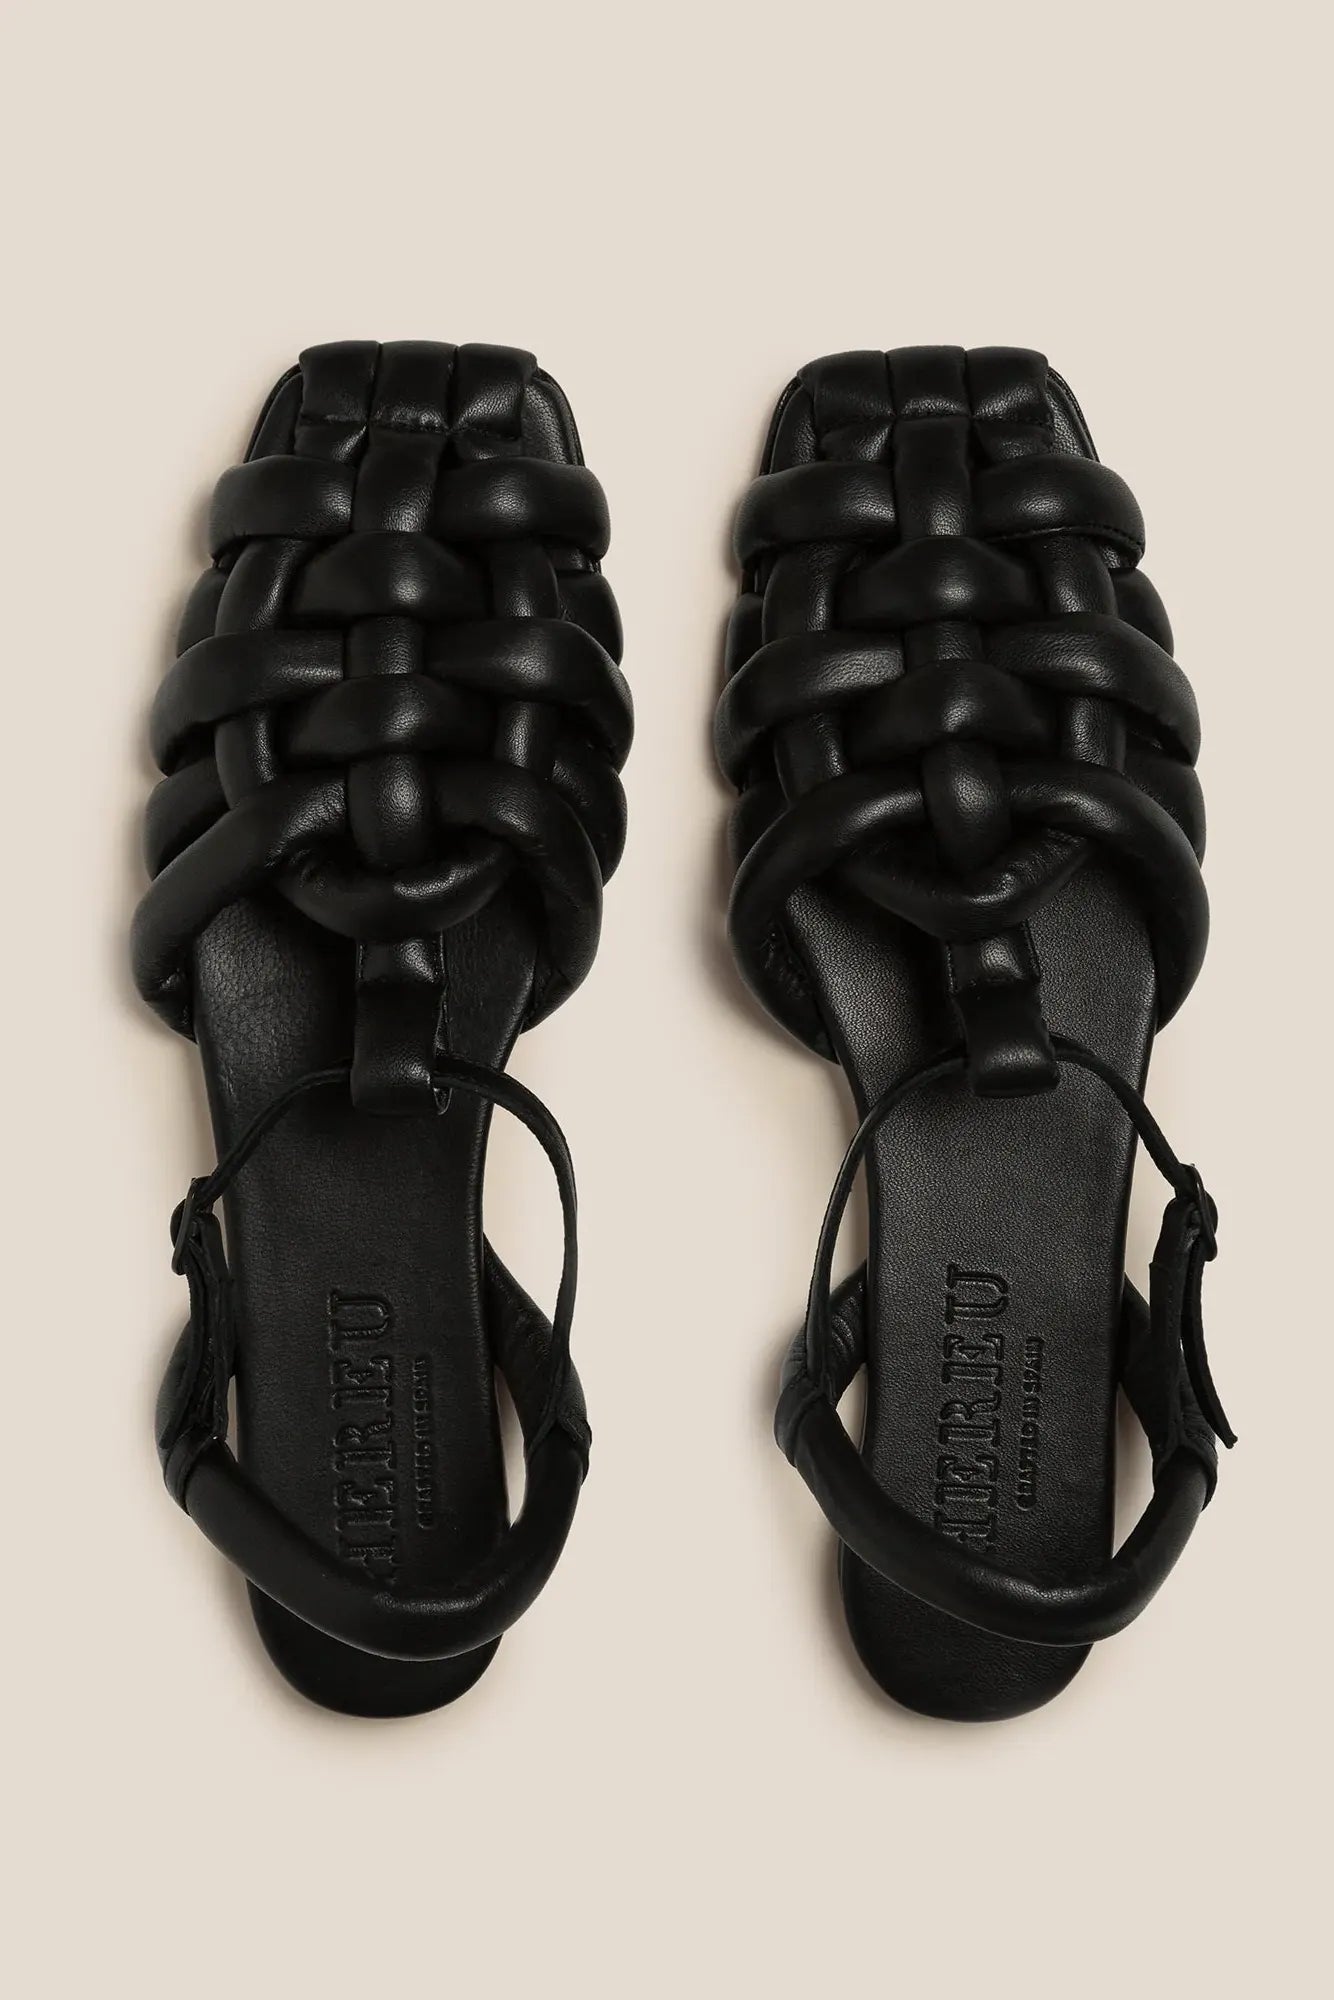 Cabersa sandals, black